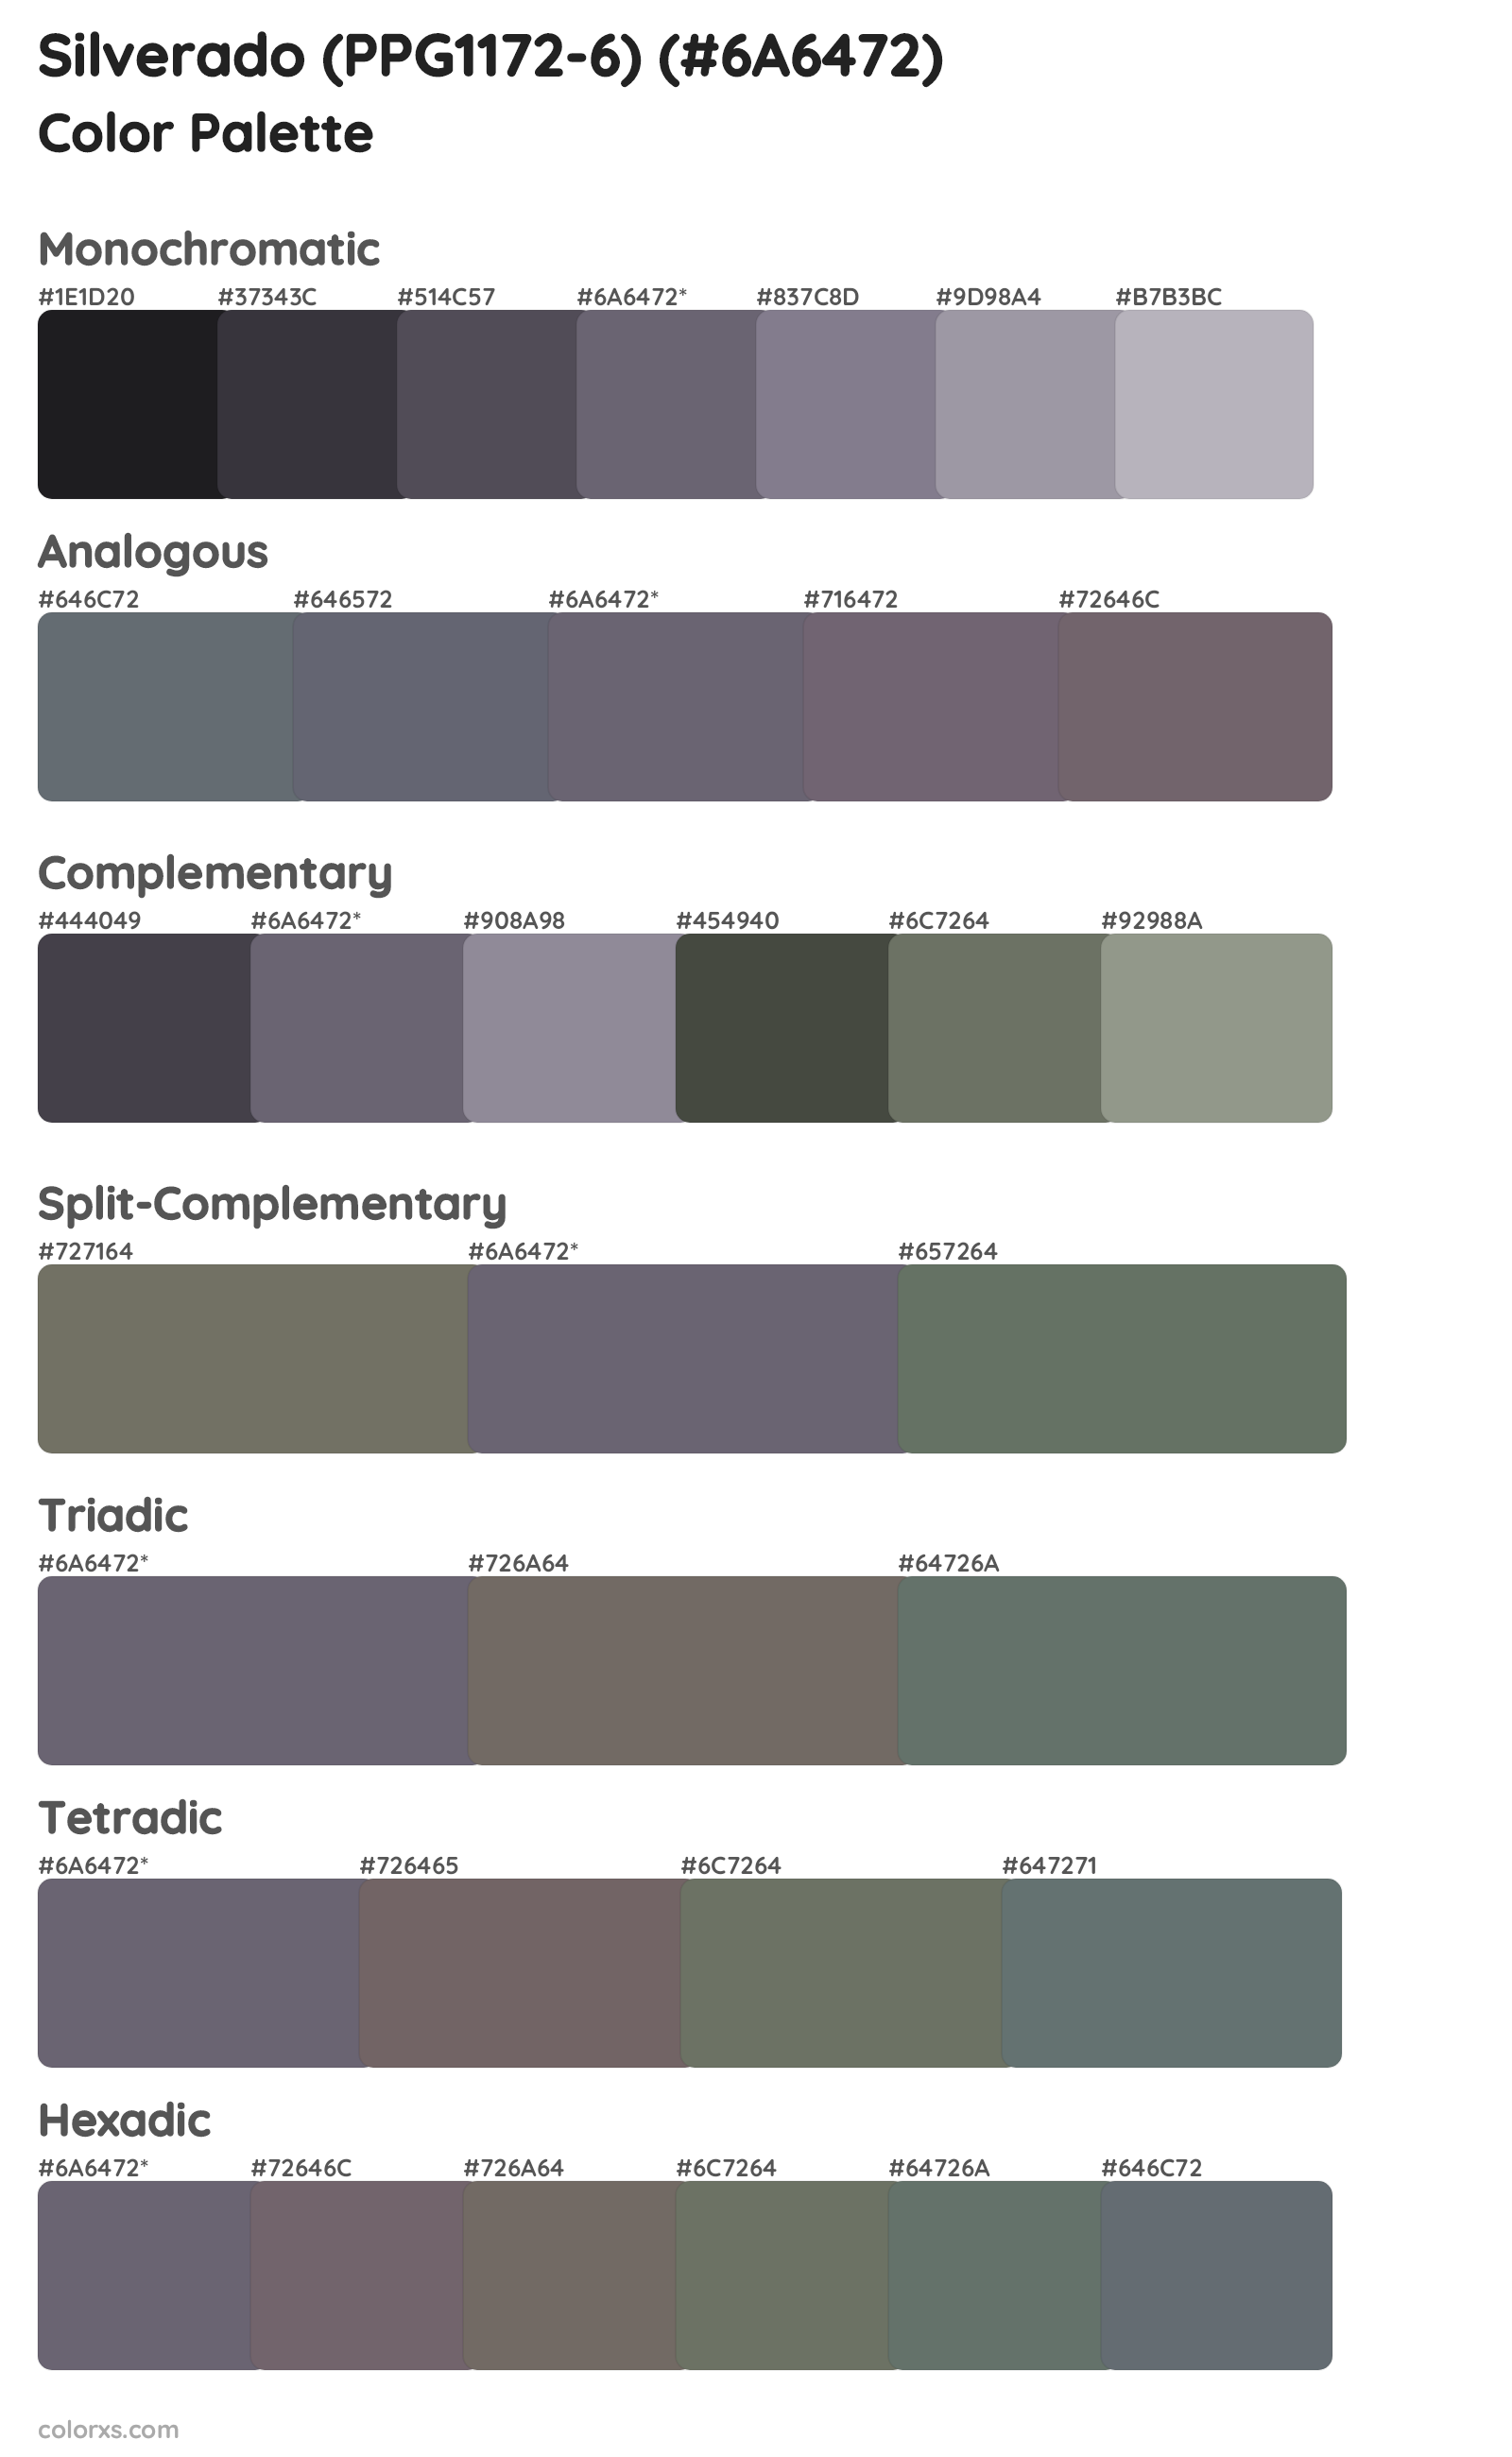 Silverado (PPG1172-6) Color Scheme Palettes